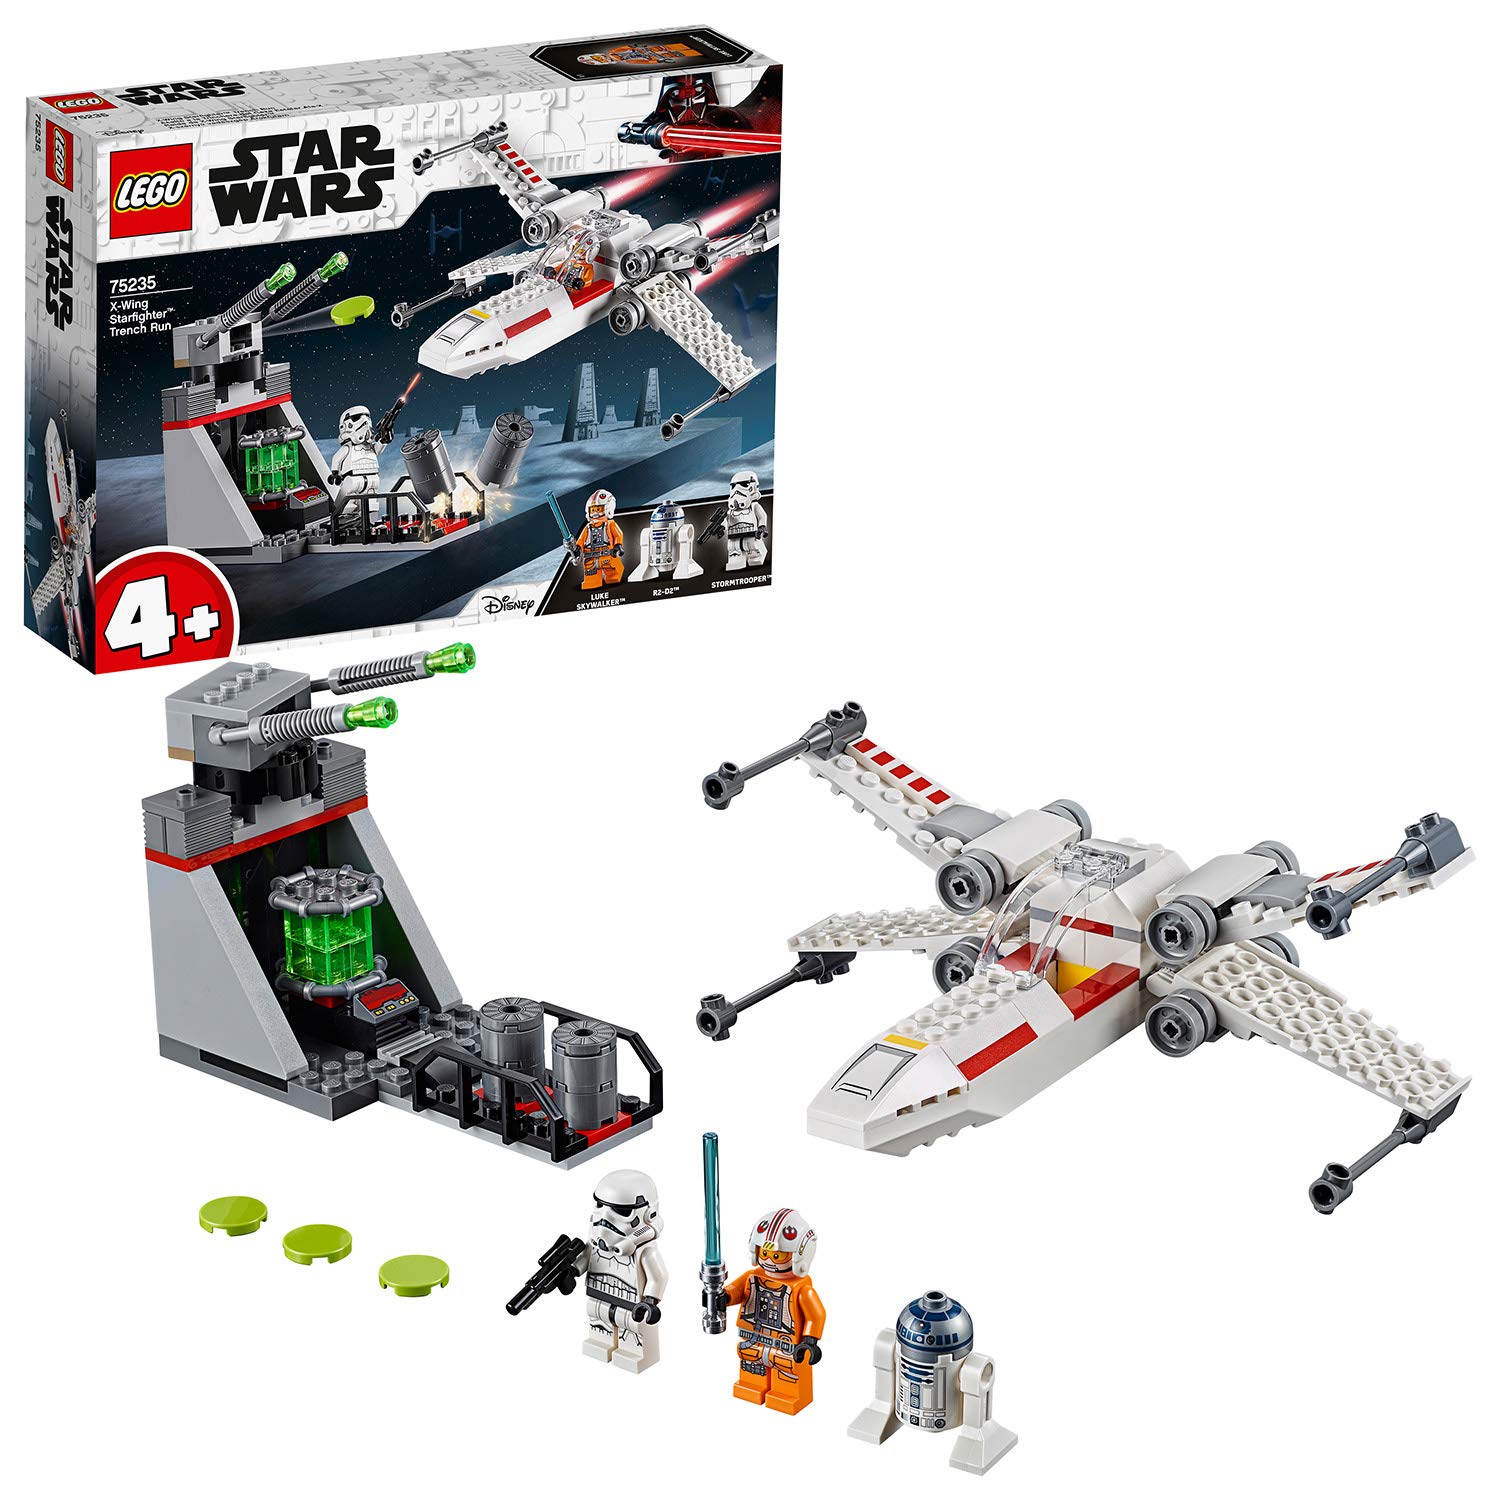 Lego Star Wars - 75235 - X-Wing Starfighter Trench Run